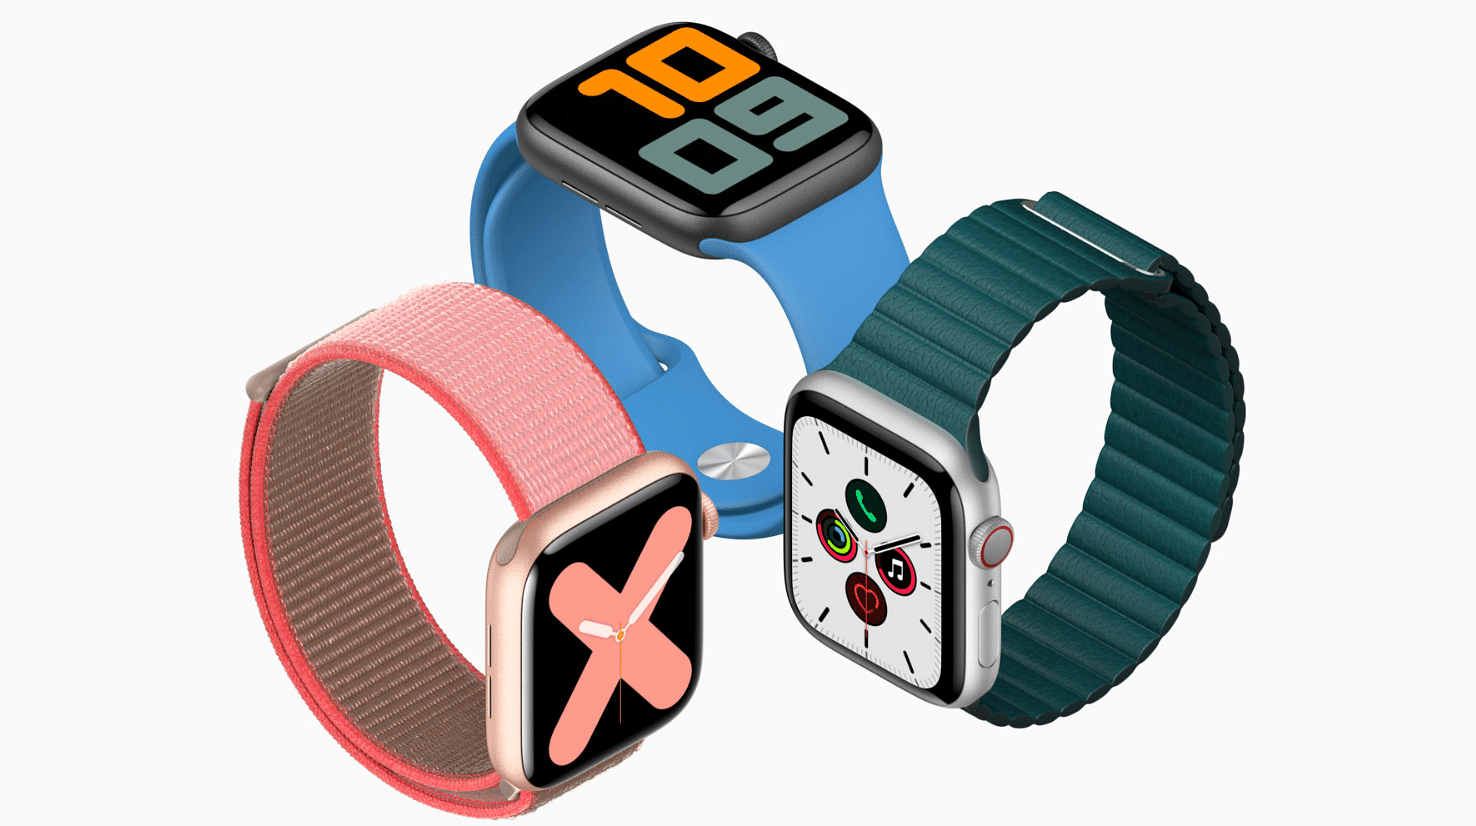 Apple Watch Series 5. Credit: Apple website